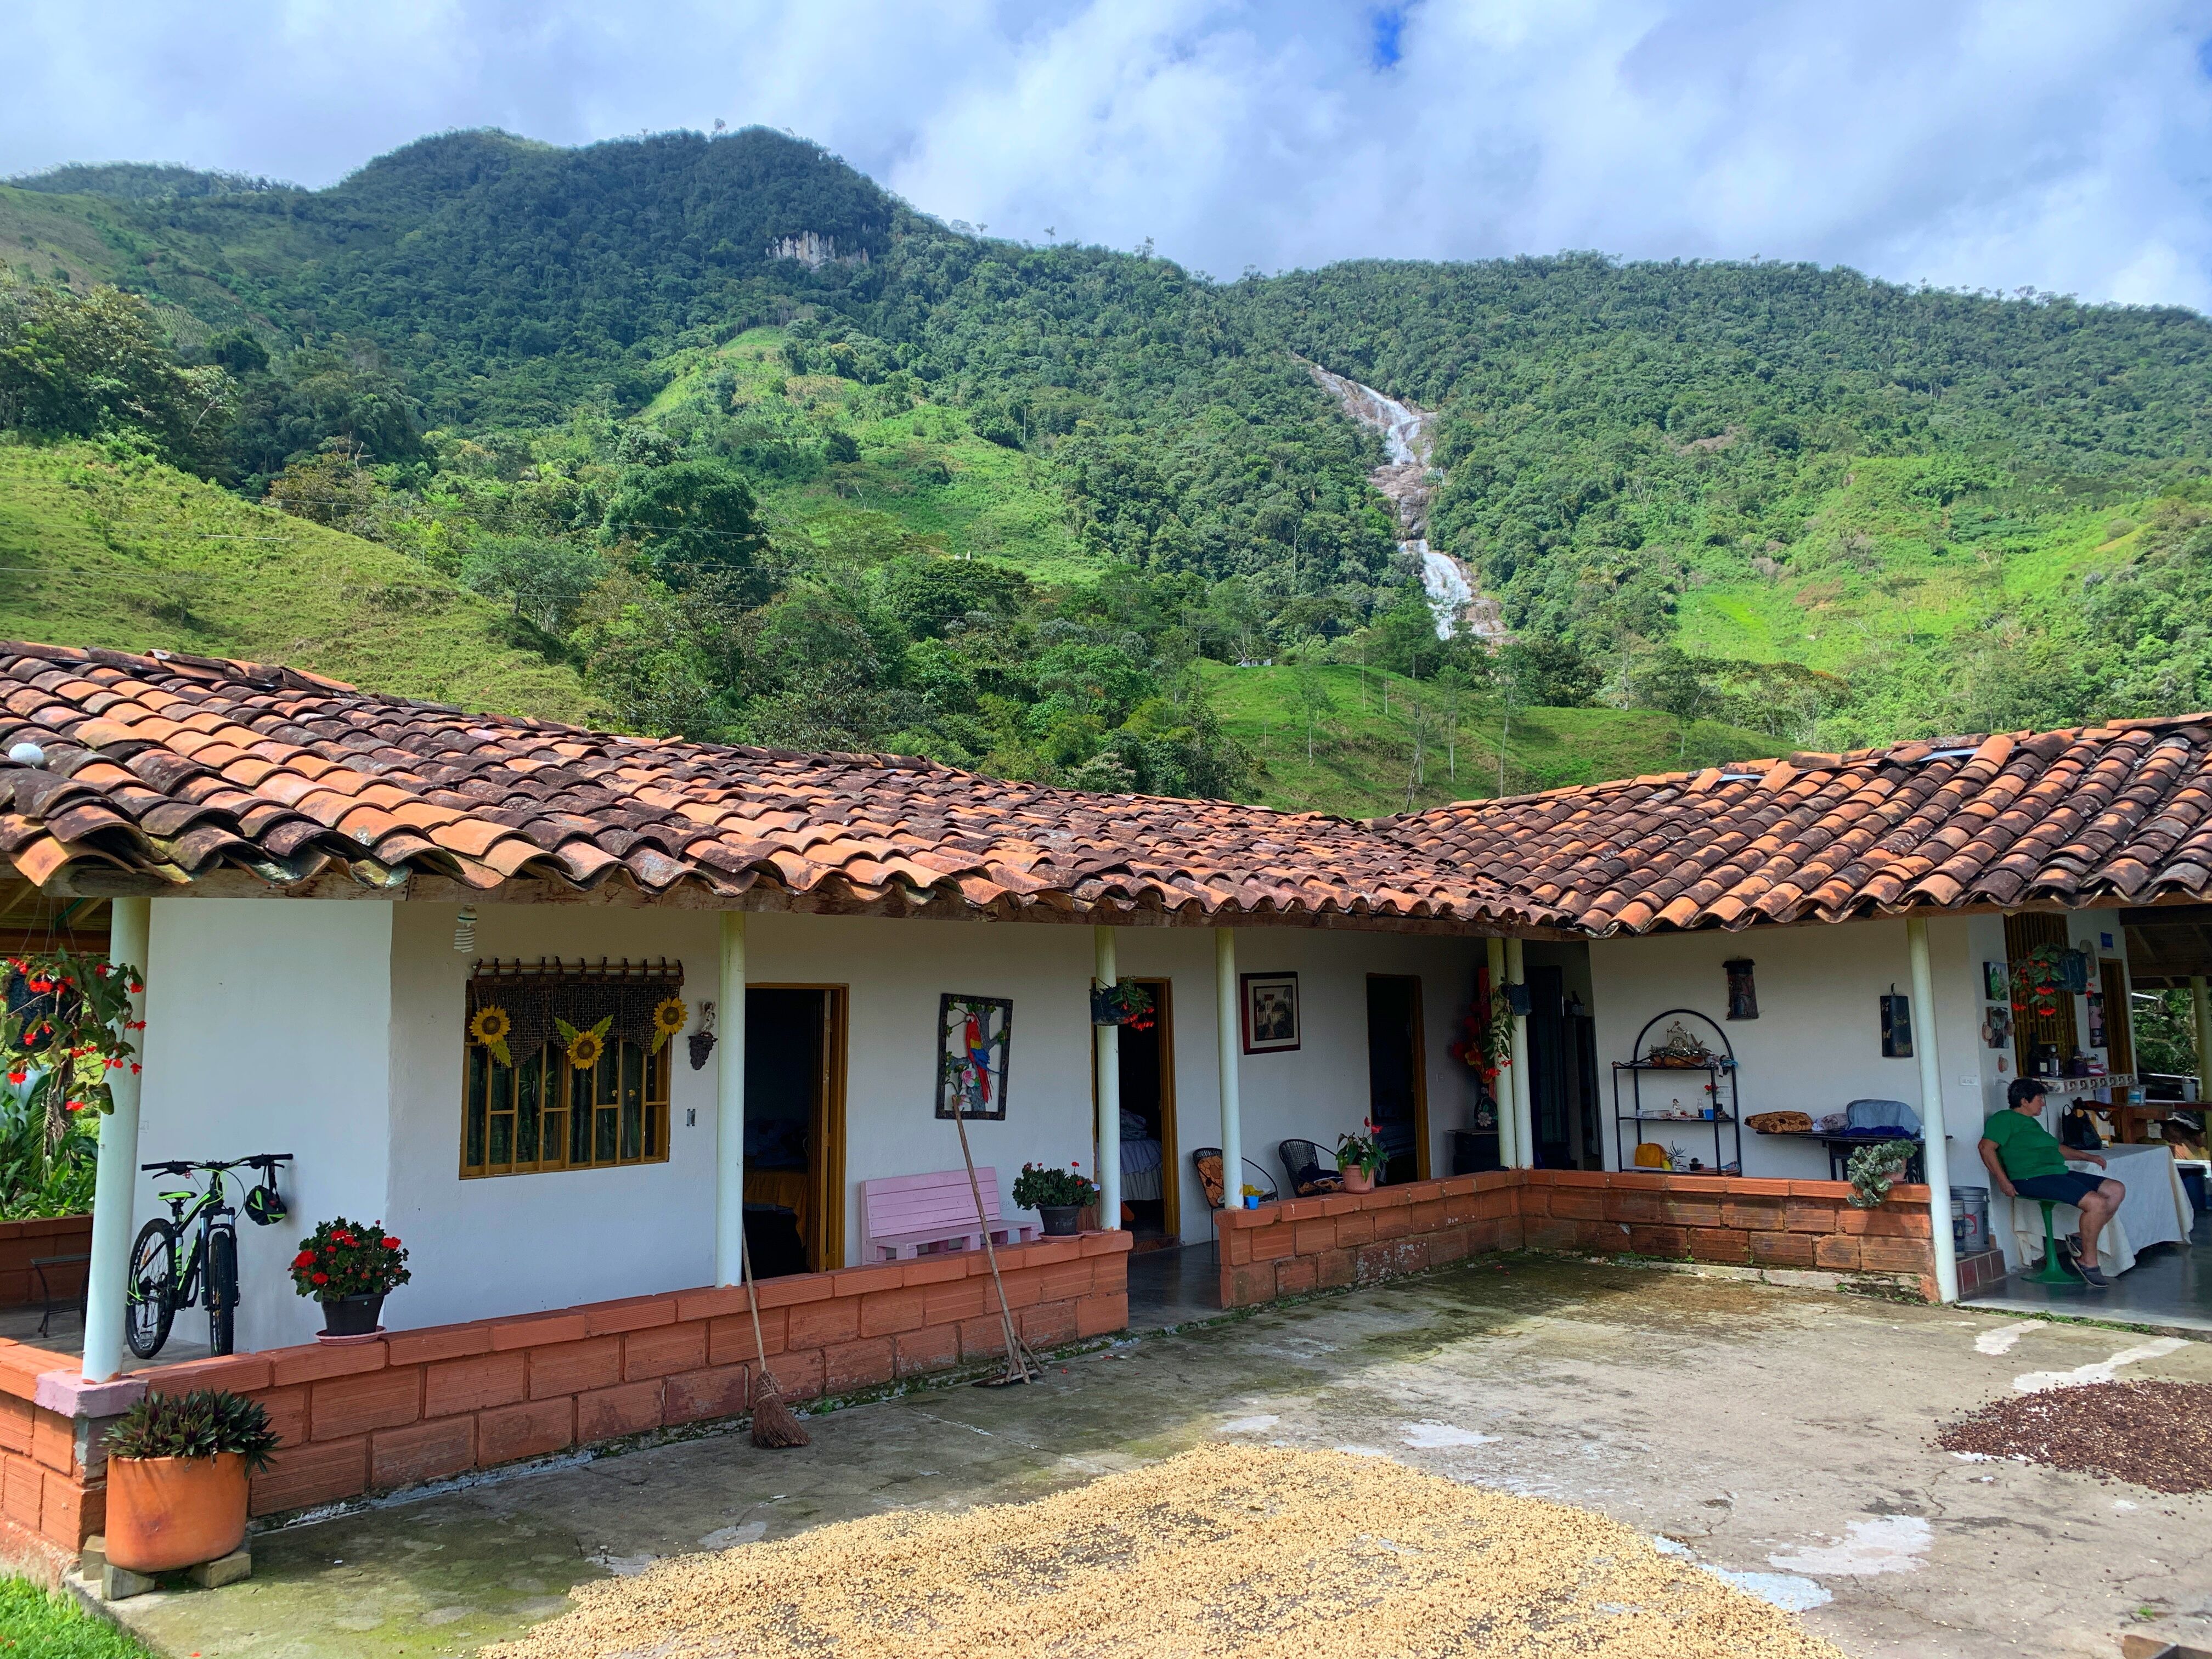 San Carlos, Antioquia: my favourite pueblo near Medellín (3 day guide)